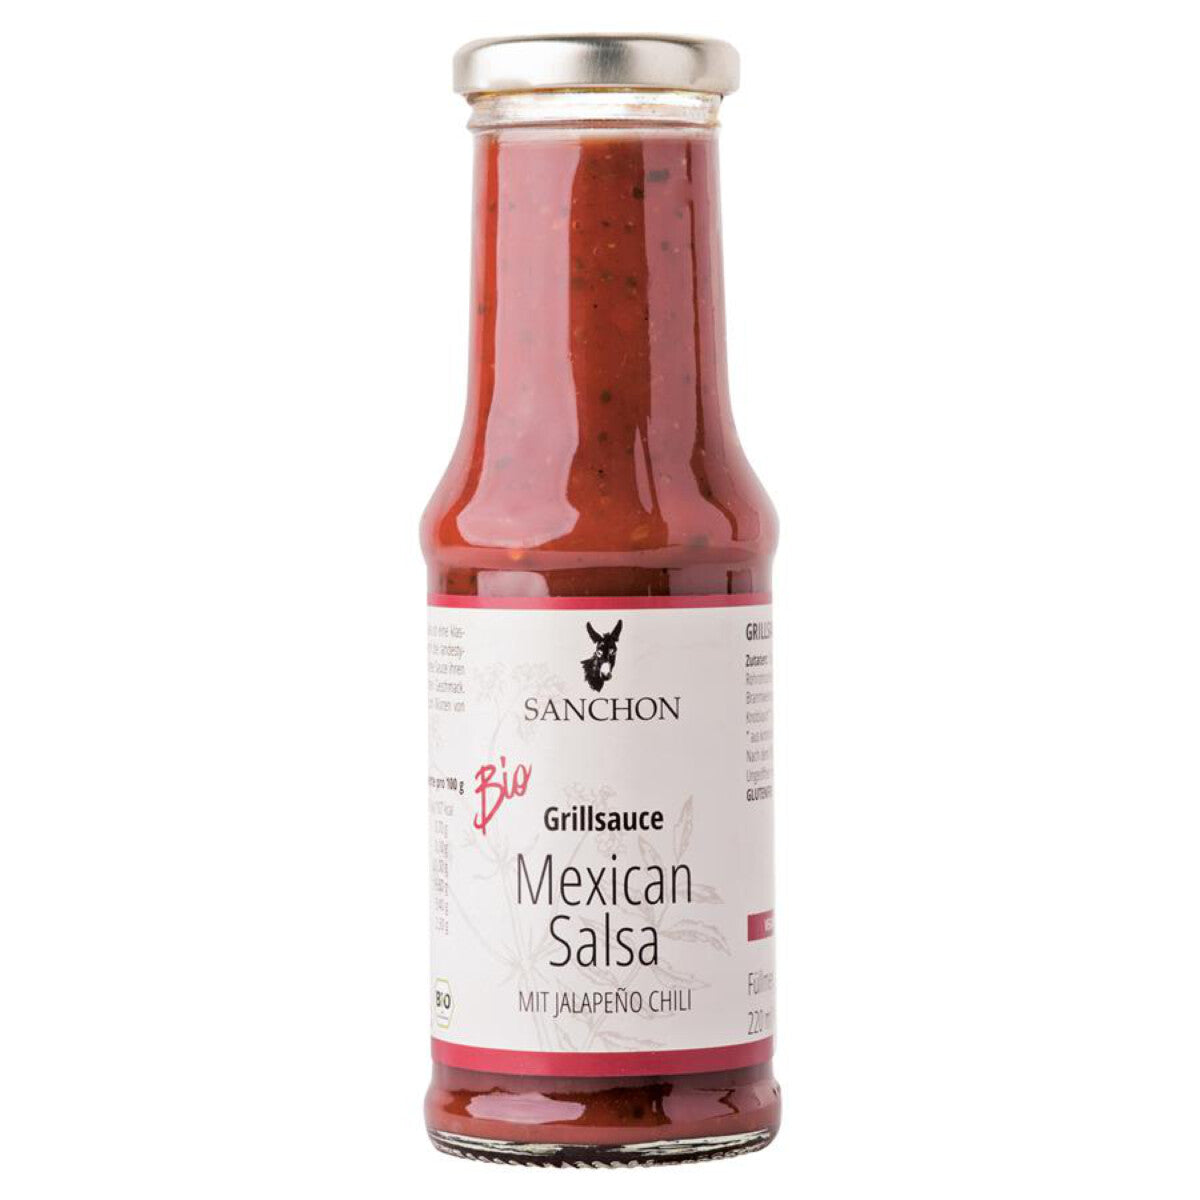 SANCHON Grillsauce Mexican Salsa - 210 ml